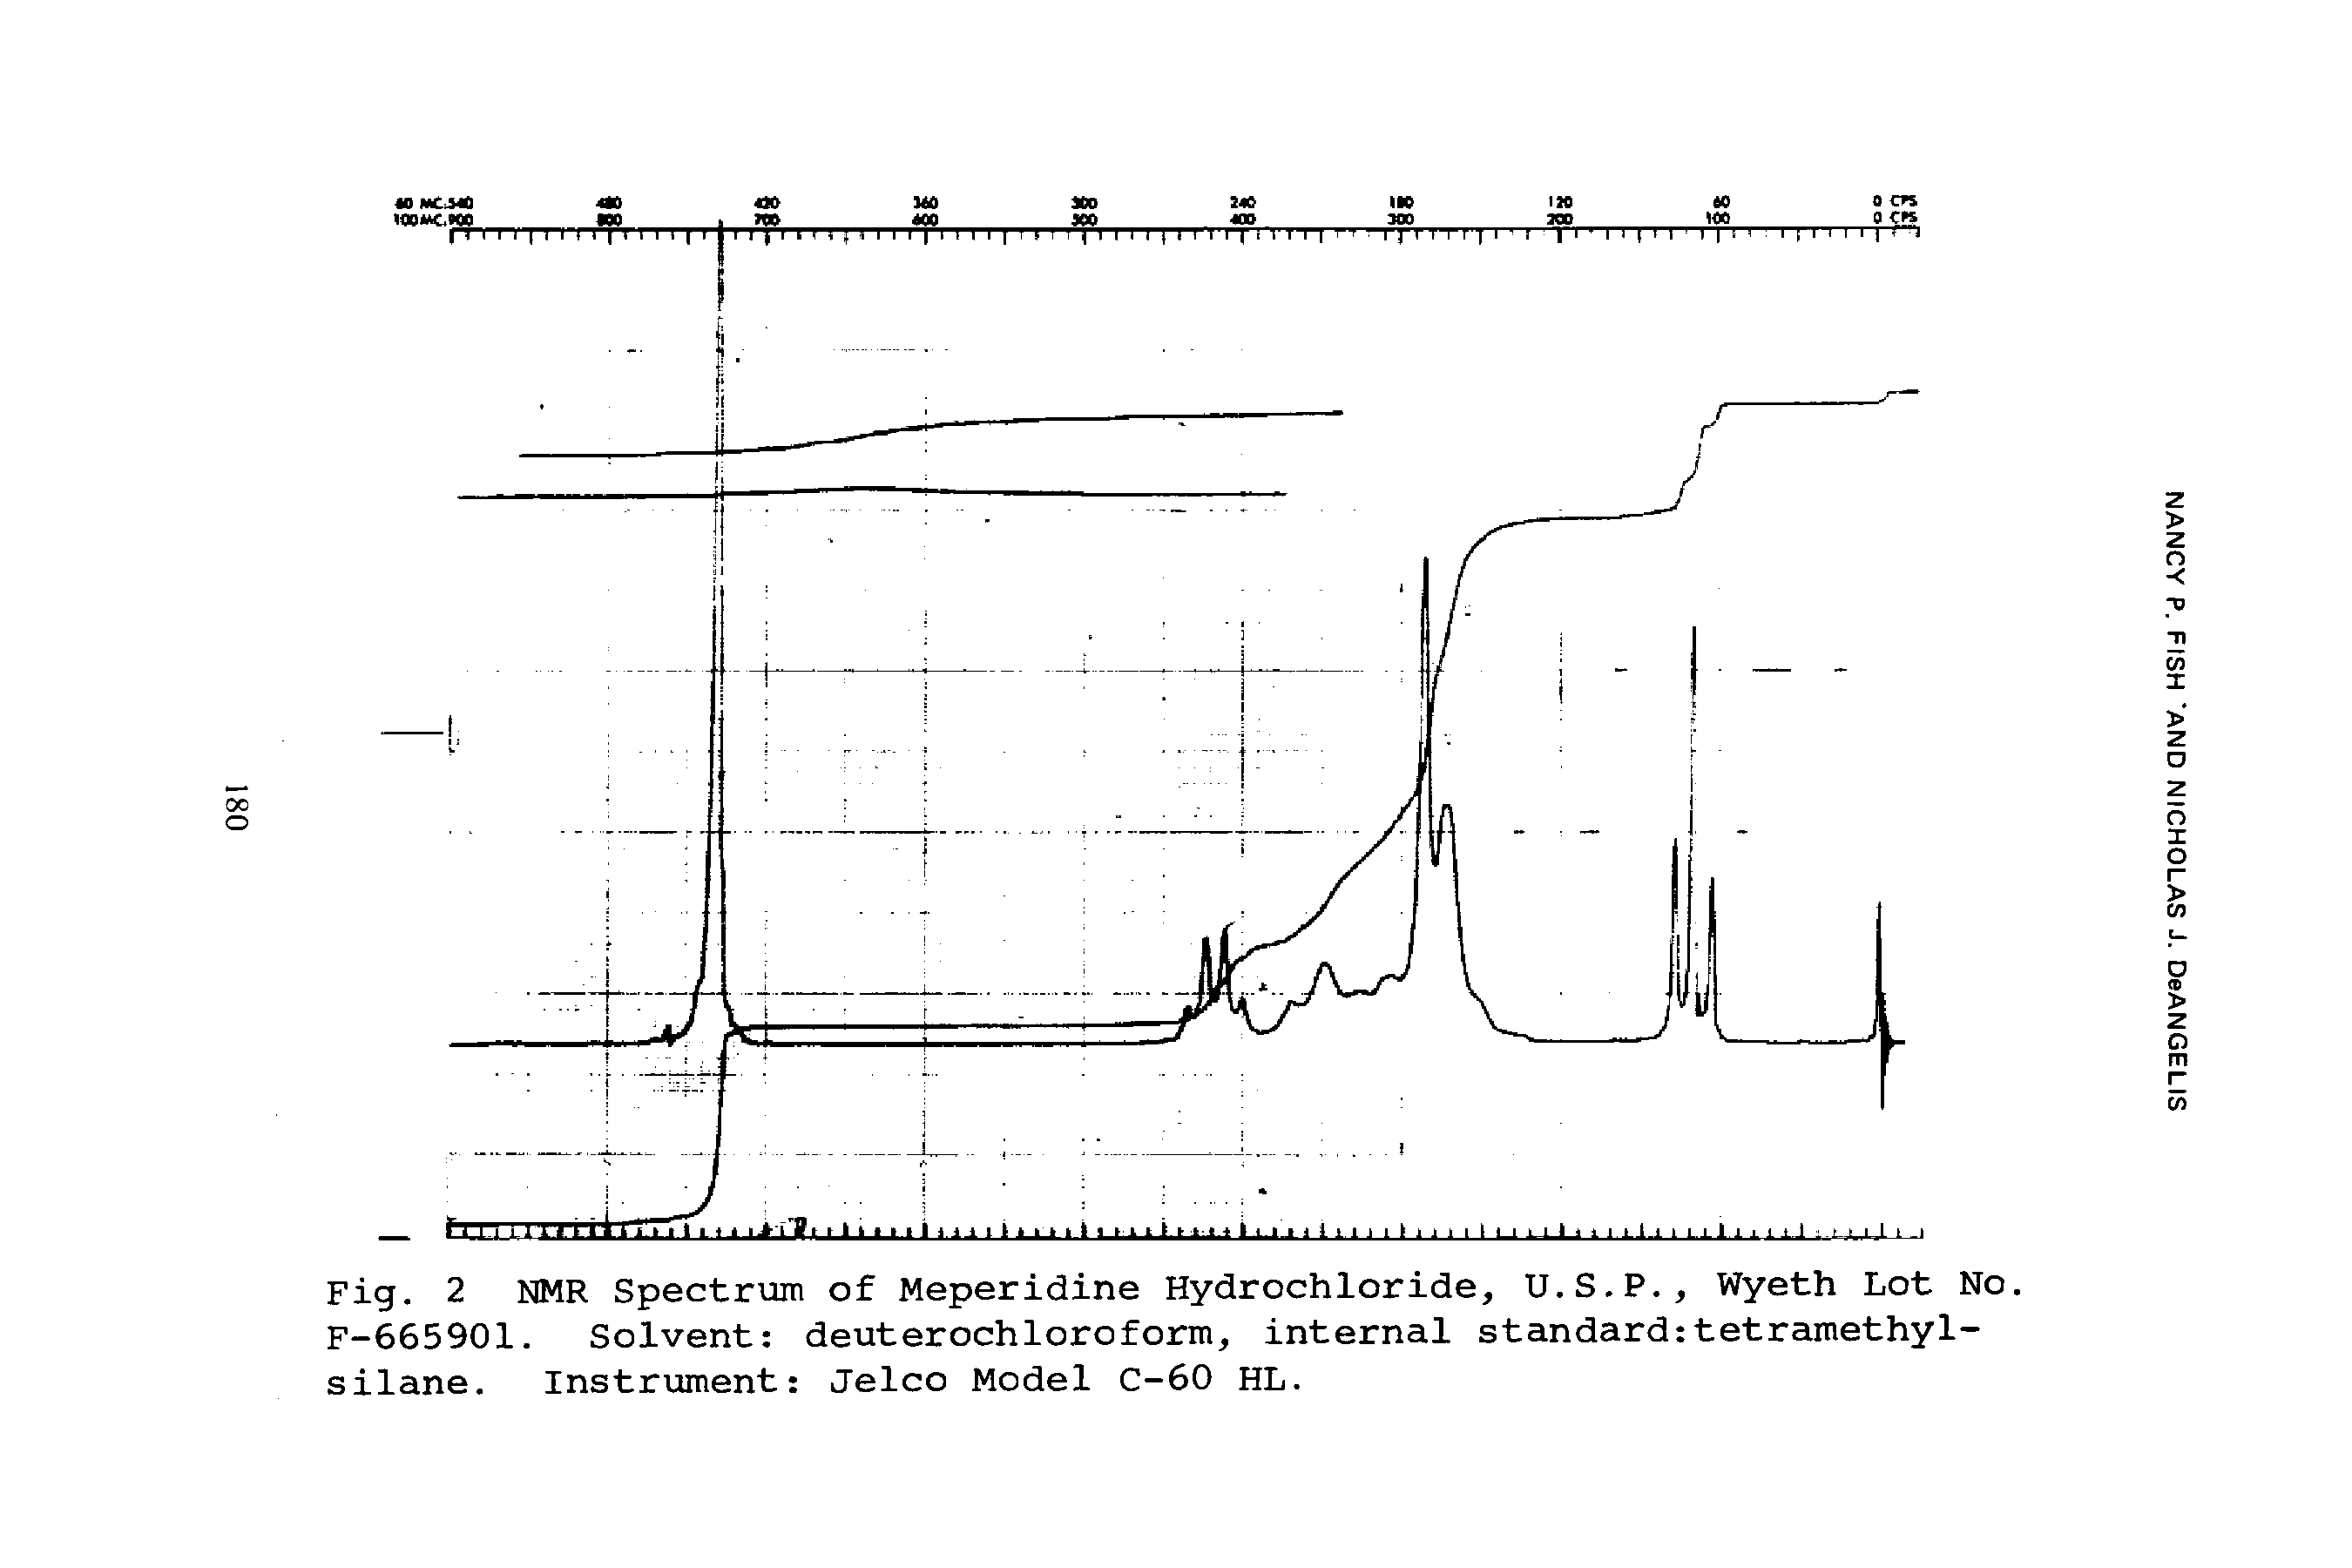 Fig. 2 NMR Spectrum of Meperidine Hydrochloride, U.S.P., Wyeth Lot No. F-665901. Solvent deuterochloroform, internal standard tetramethyl-silane. Instrument Jelco Model C-60 HL.